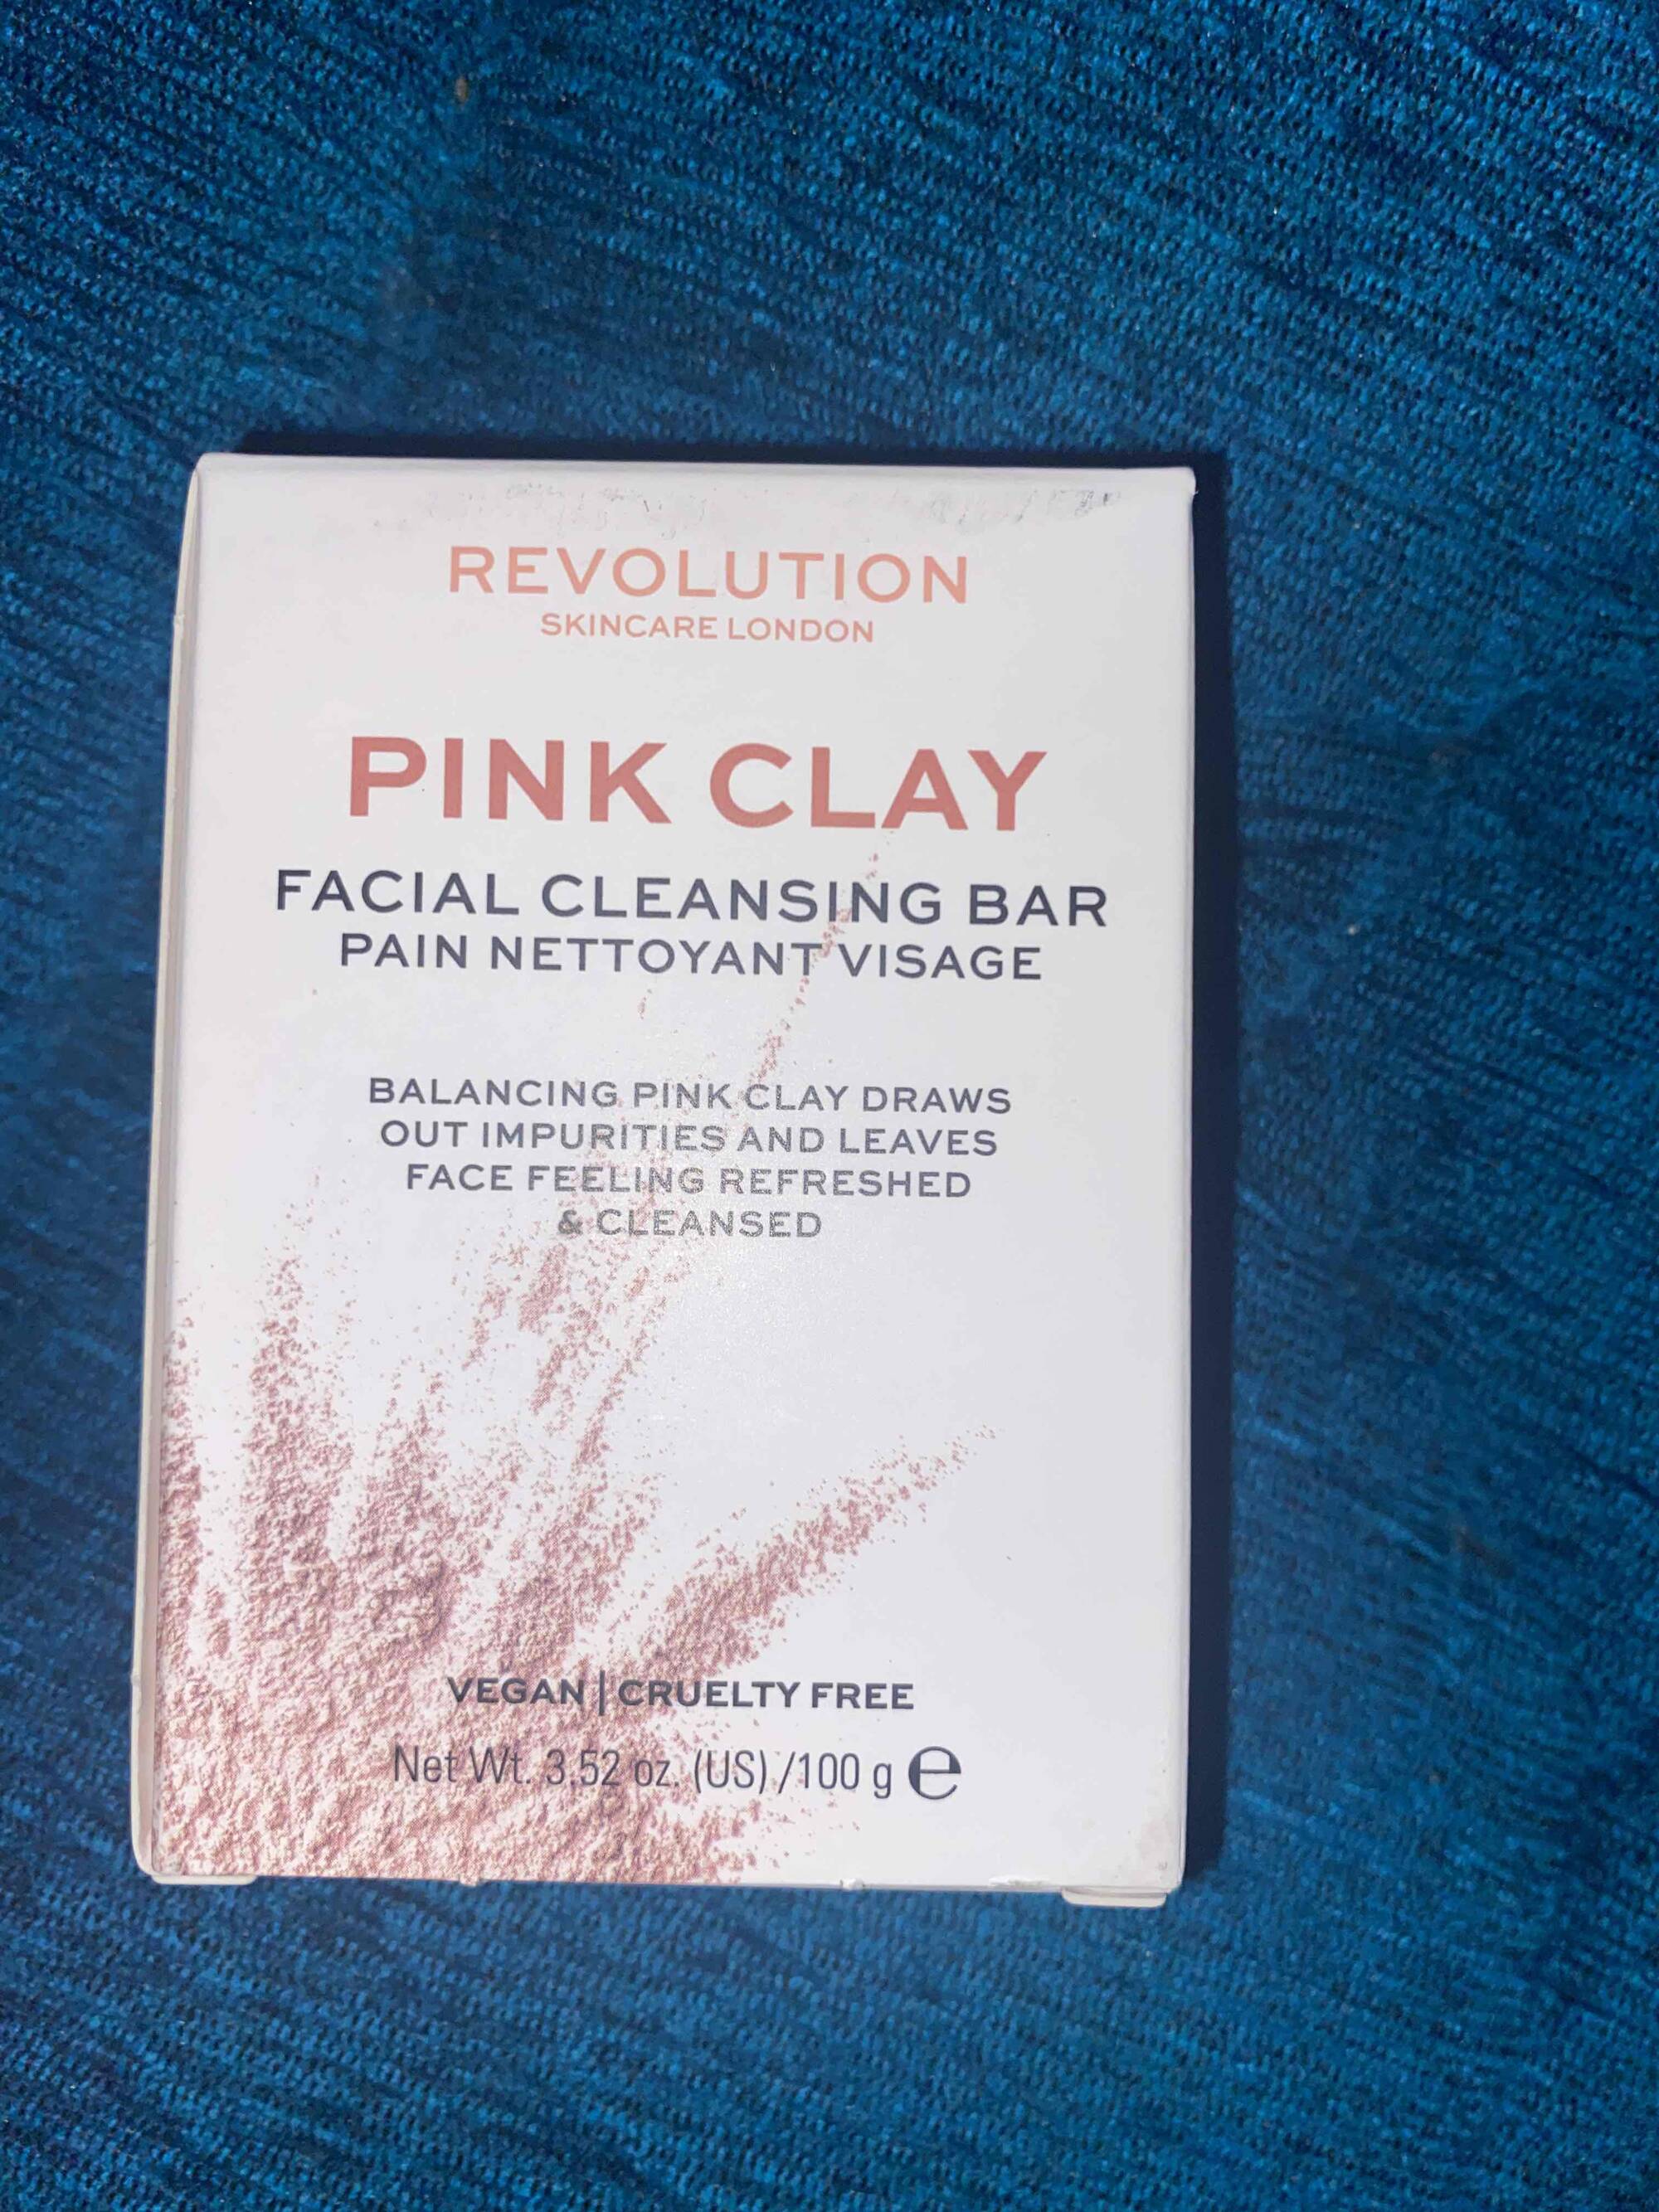 REVOLUTION - Pink clay - Pain nettoyant visage 